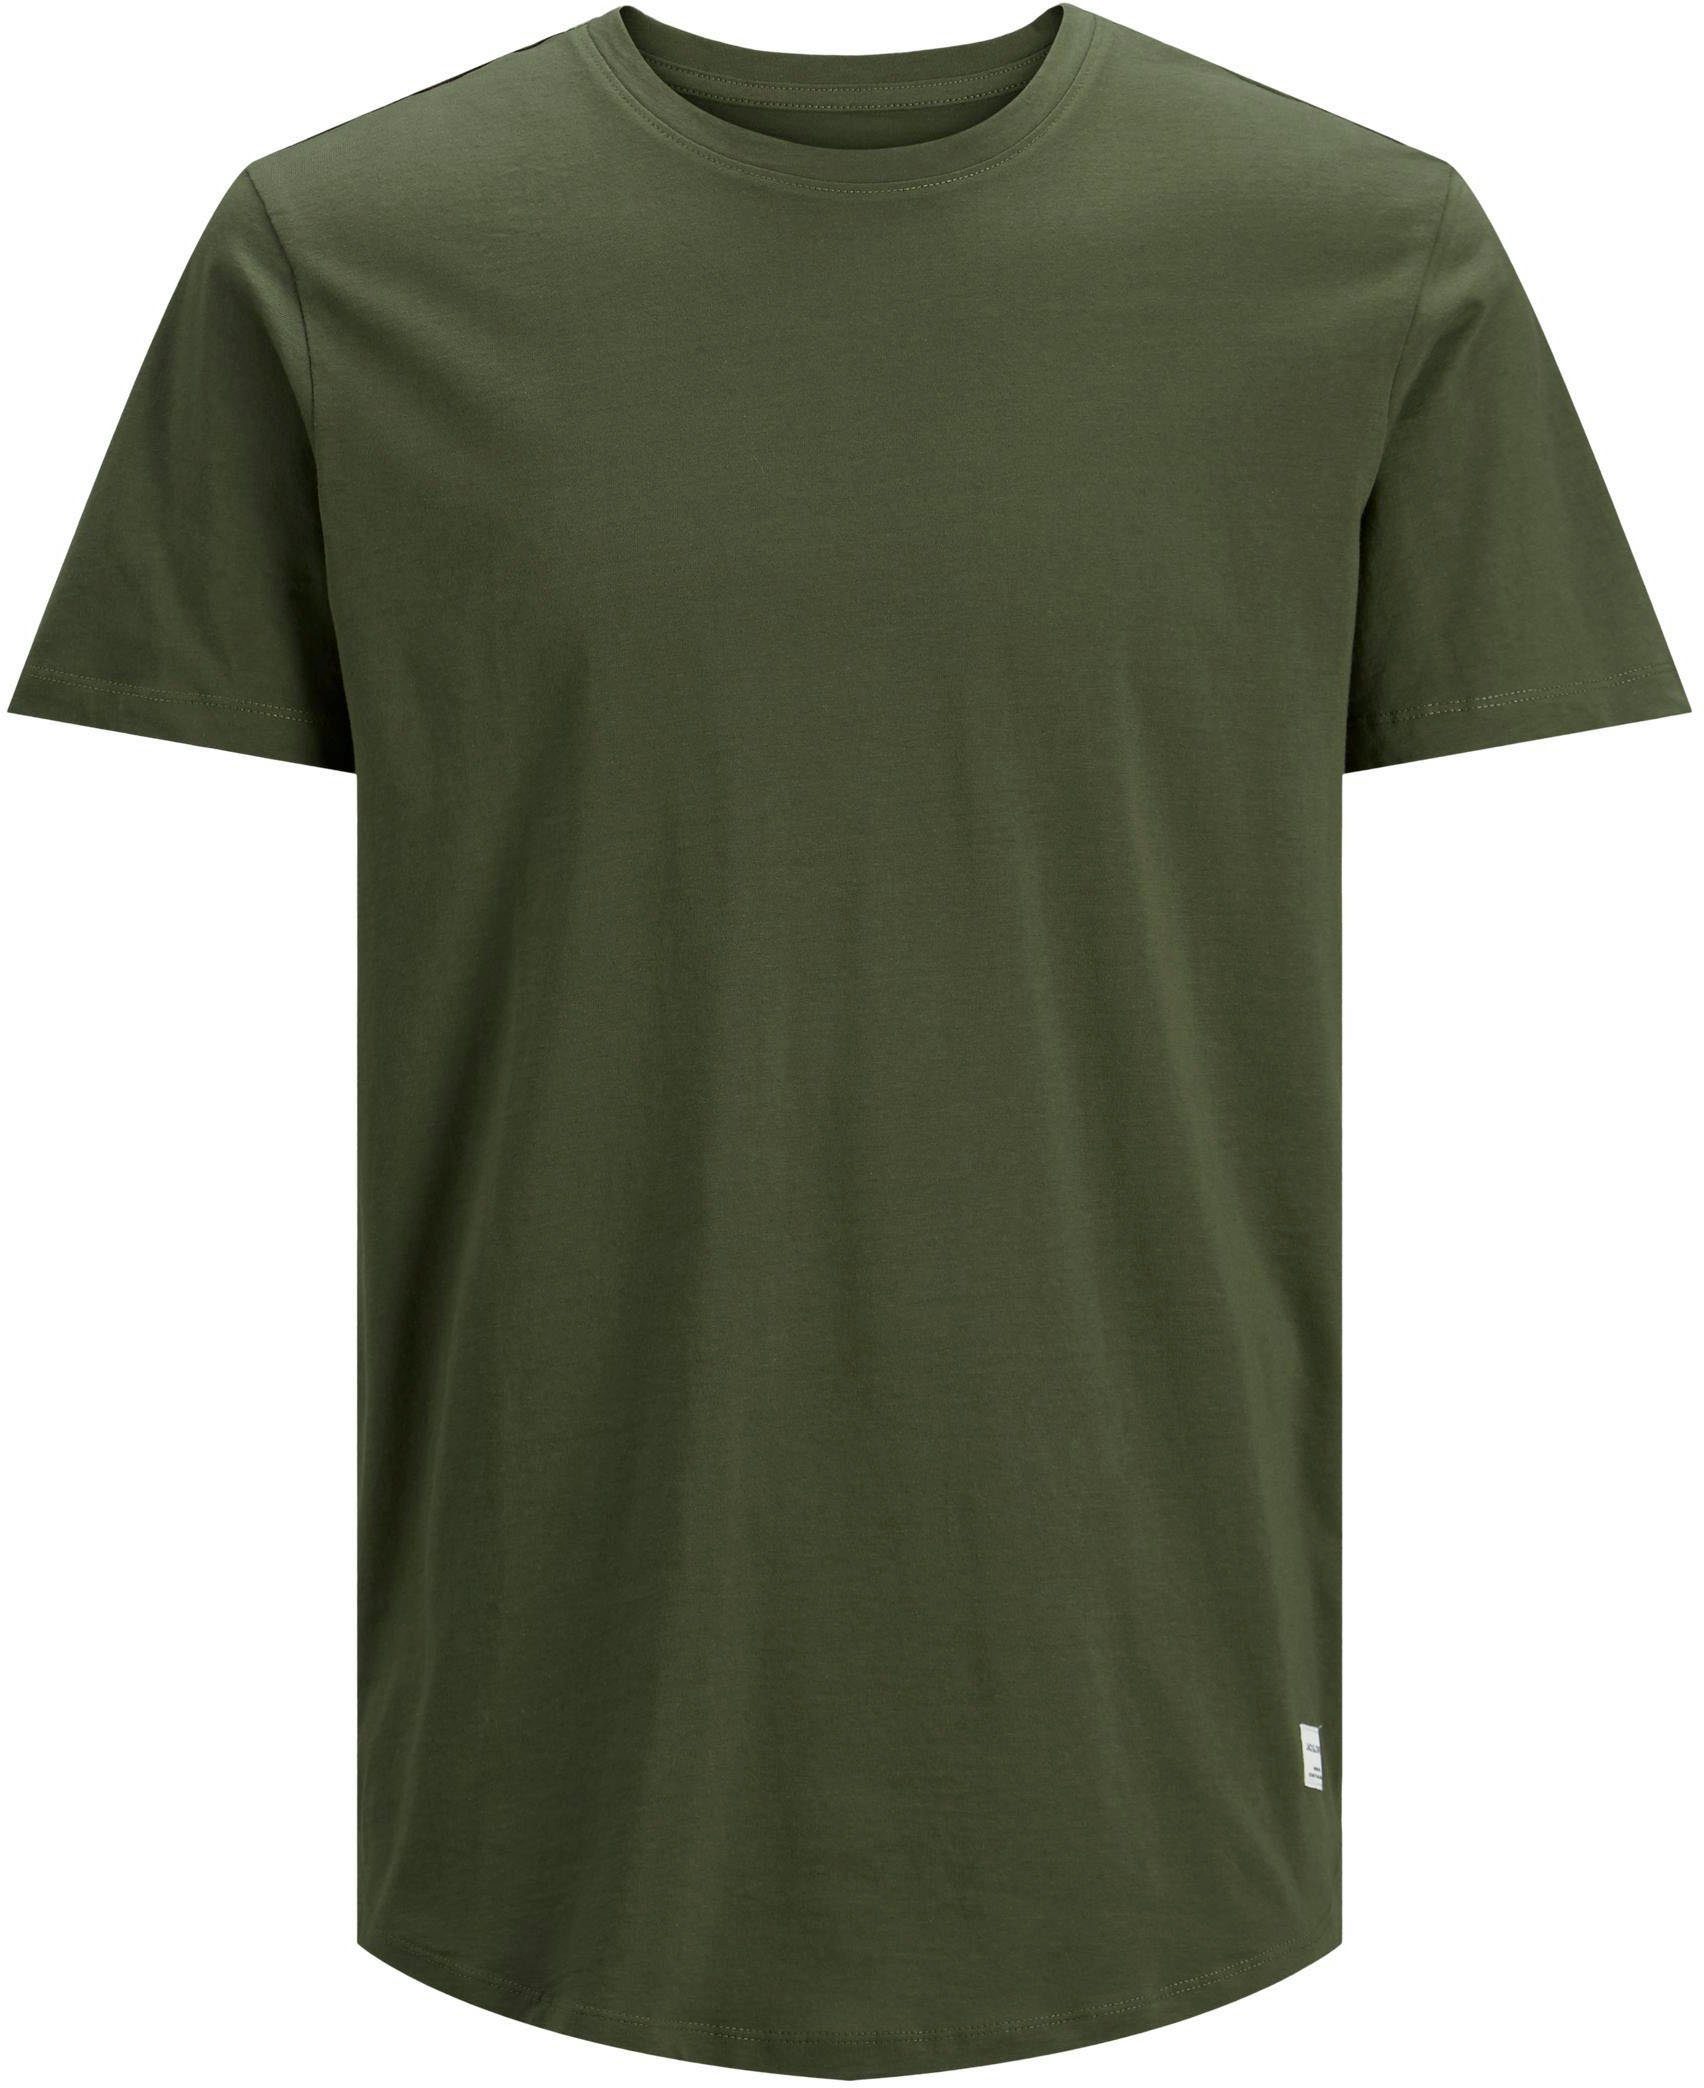 CREW NOA & Jones navy, NECK T-Shirt 5er-Pack) TEE (Packung, Jack 5-tlg., 5PK weiß, schawarz